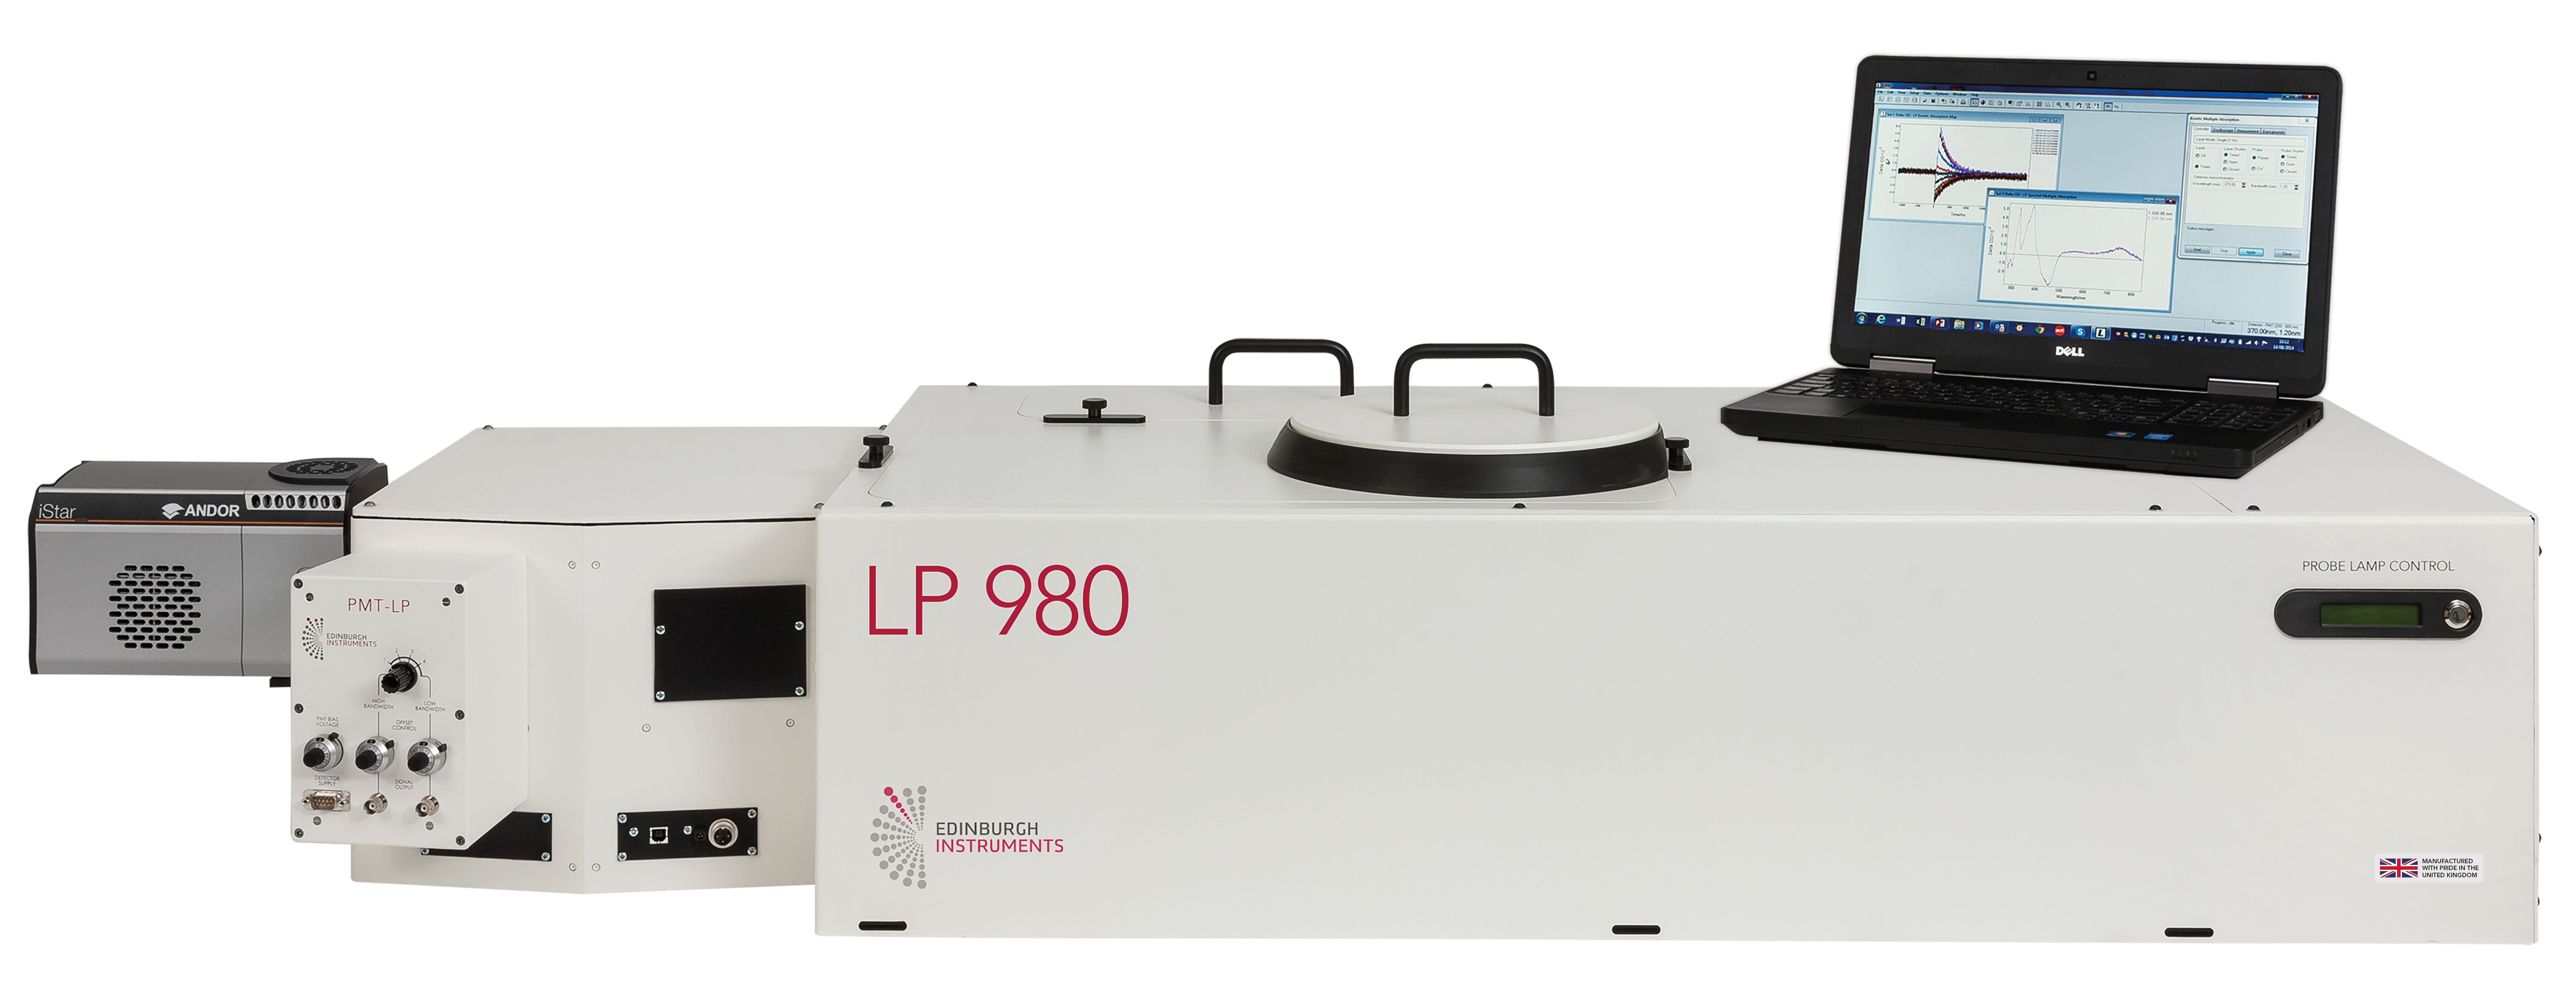 LP980 Spectrometer